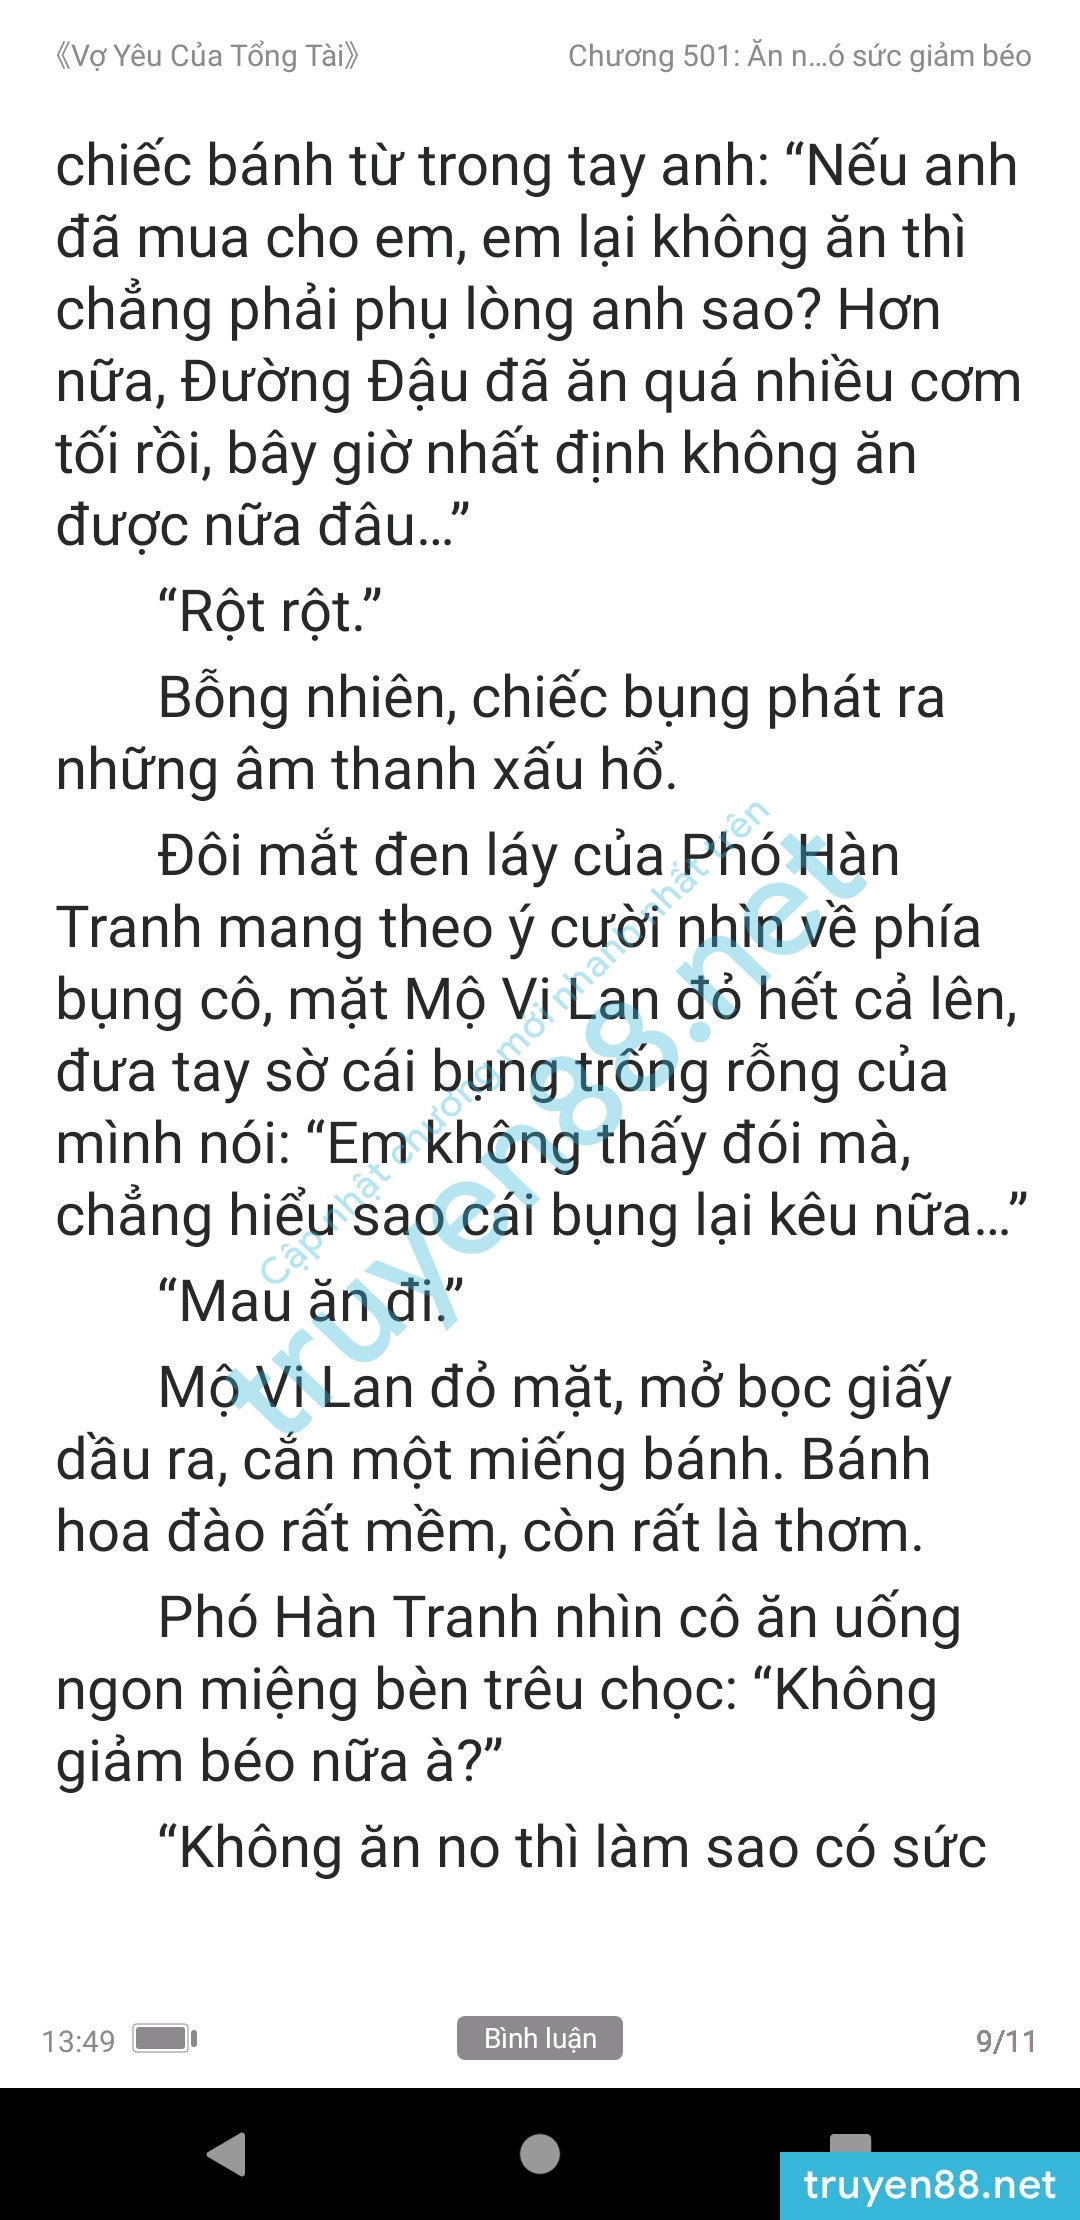 vo-yeu-cua-tong-tai-mo-vi-lan--pho-han-tranh-511-0